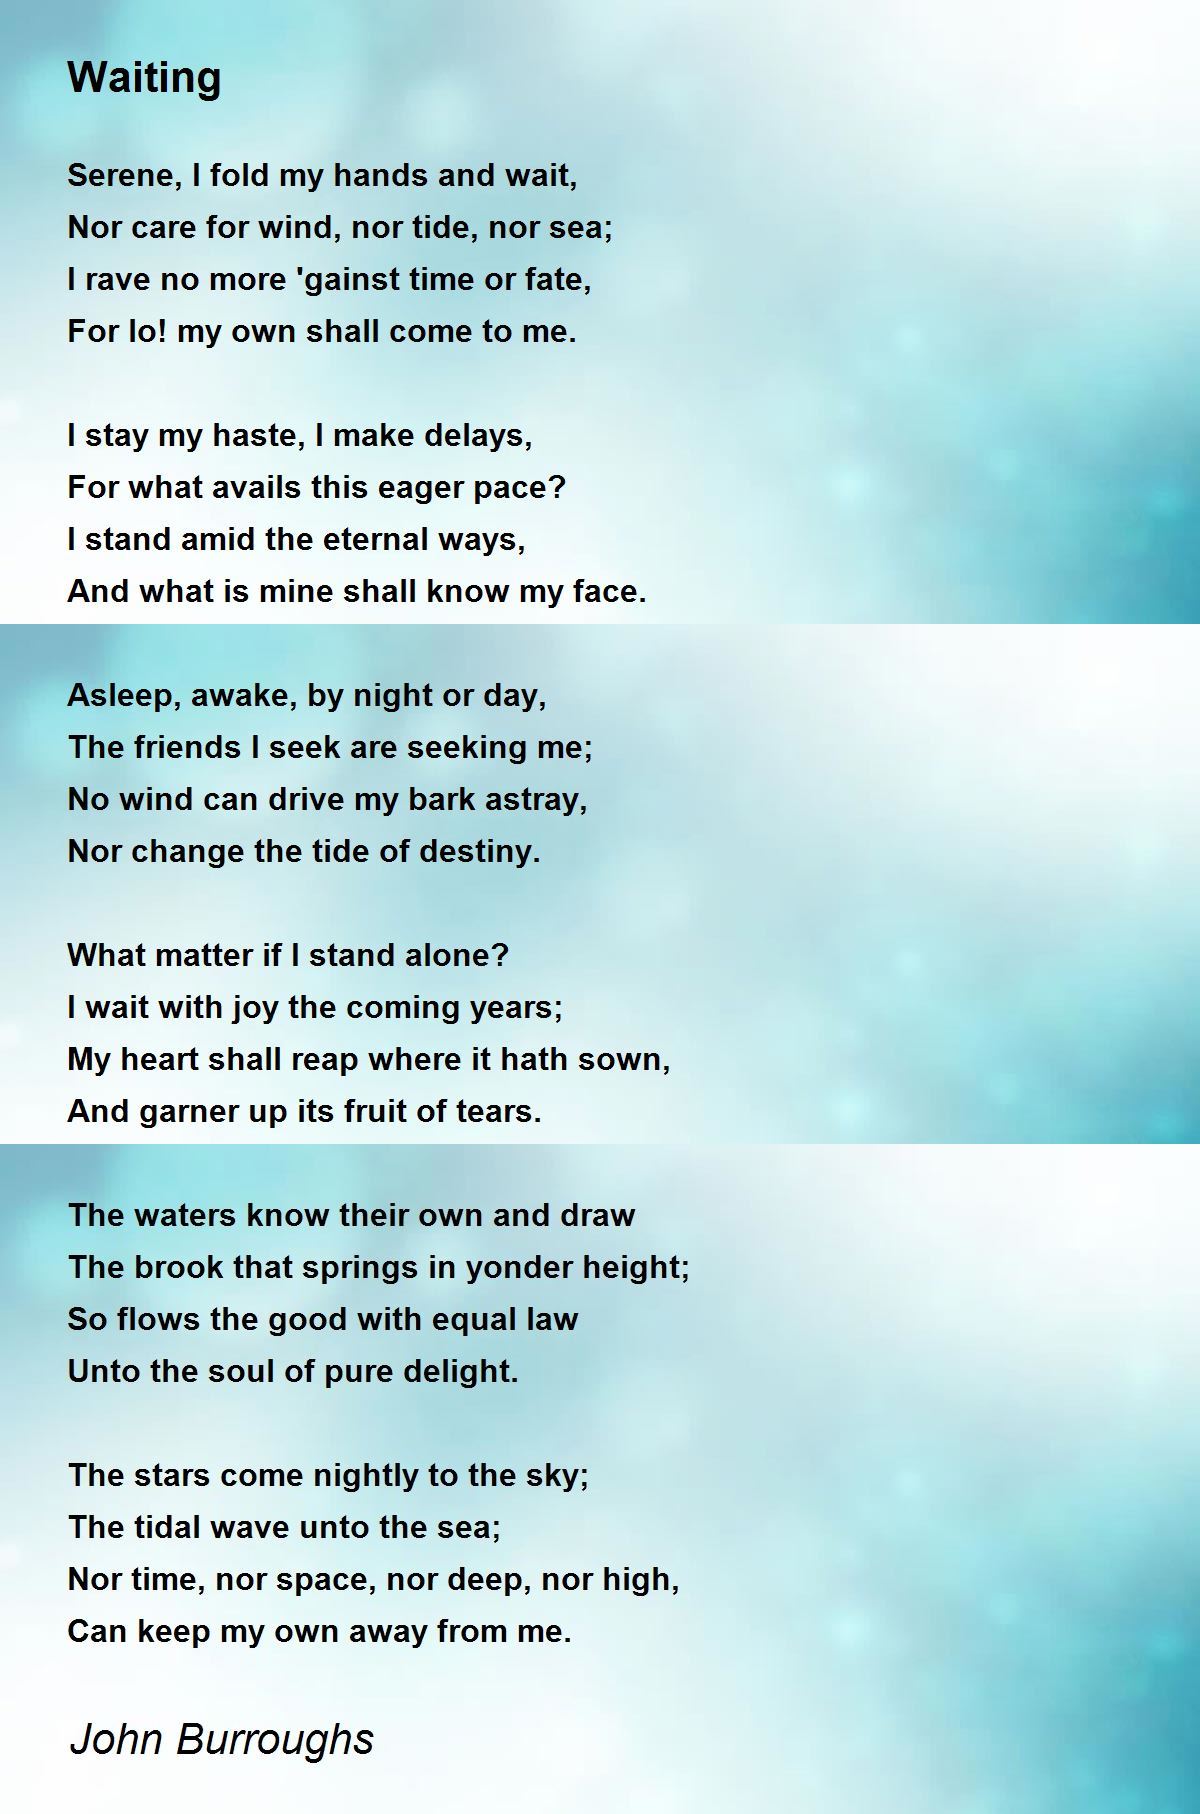 Waiting Poem by John Burroughs - Poem Hunter